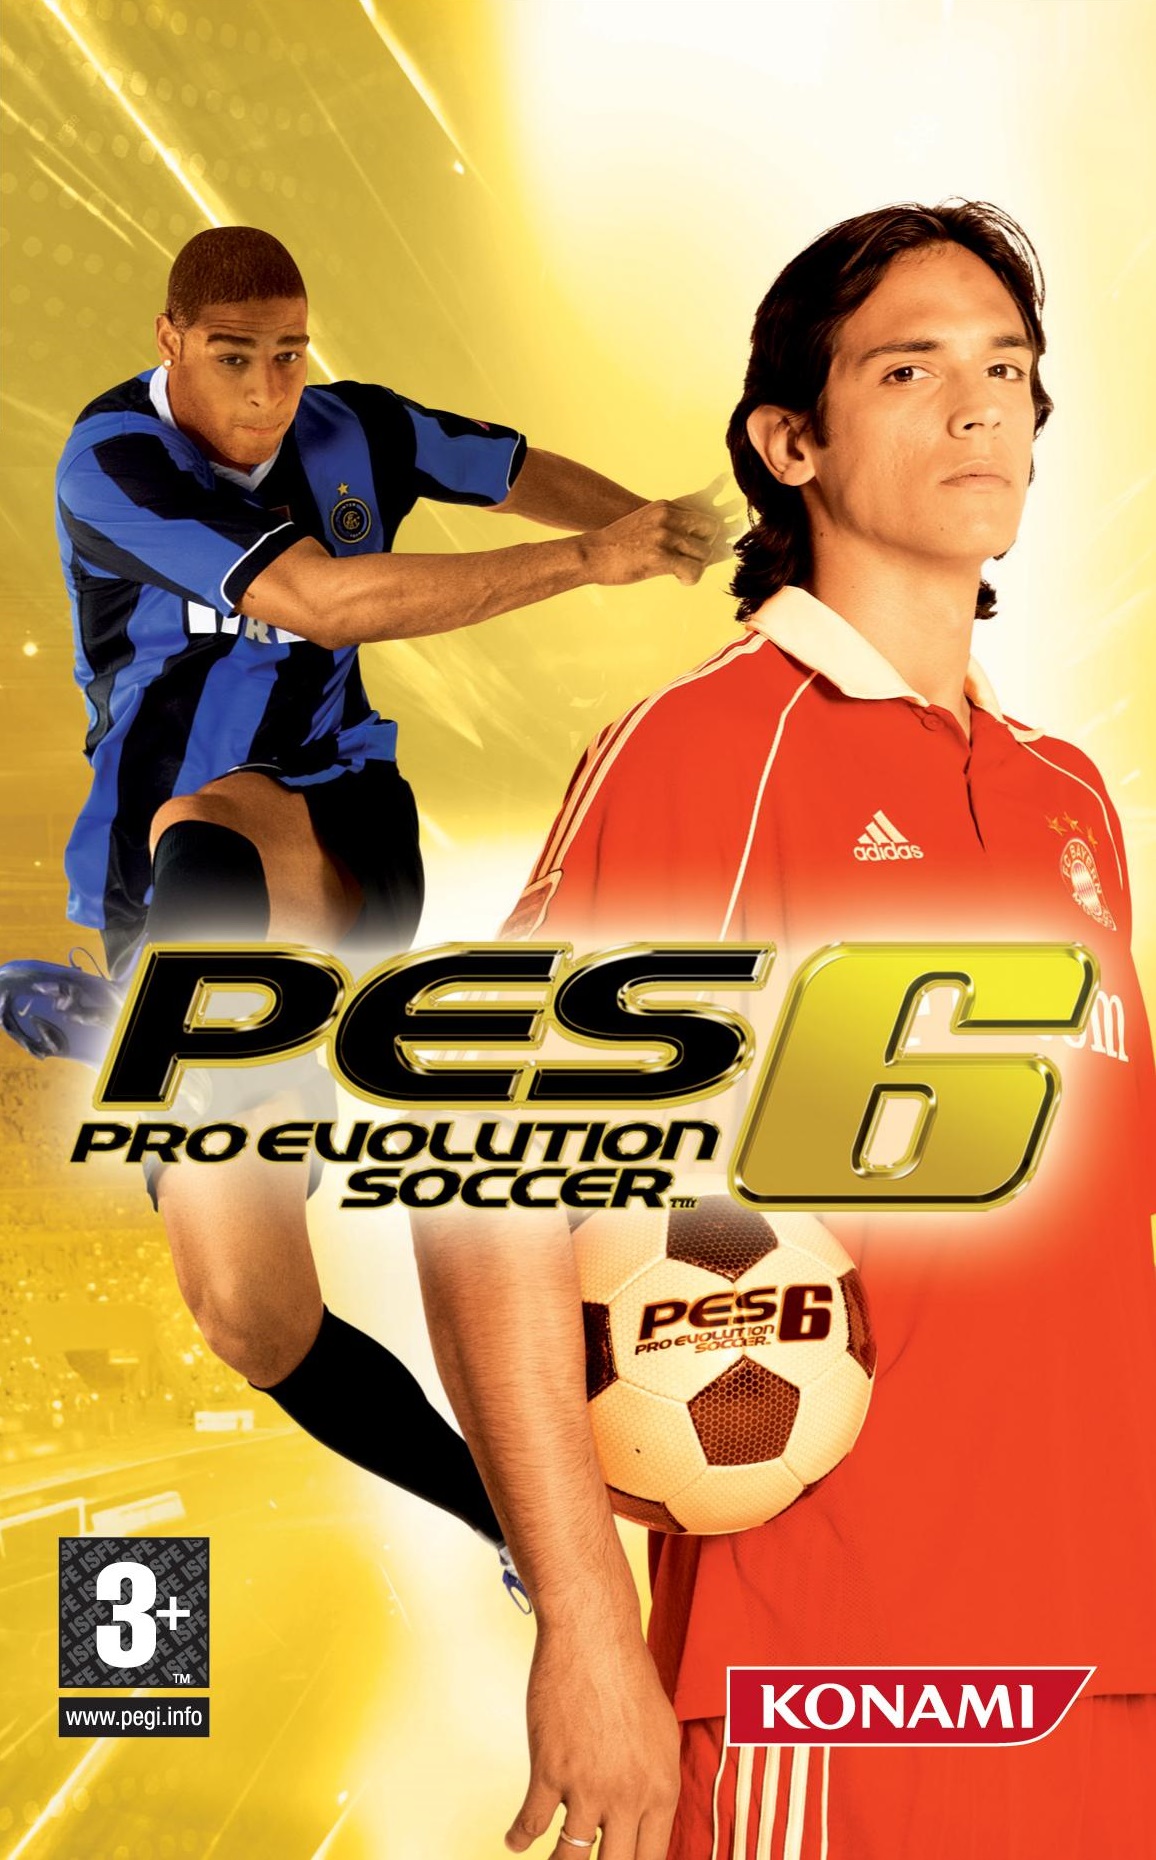 Pro evolution soccer 6 pc